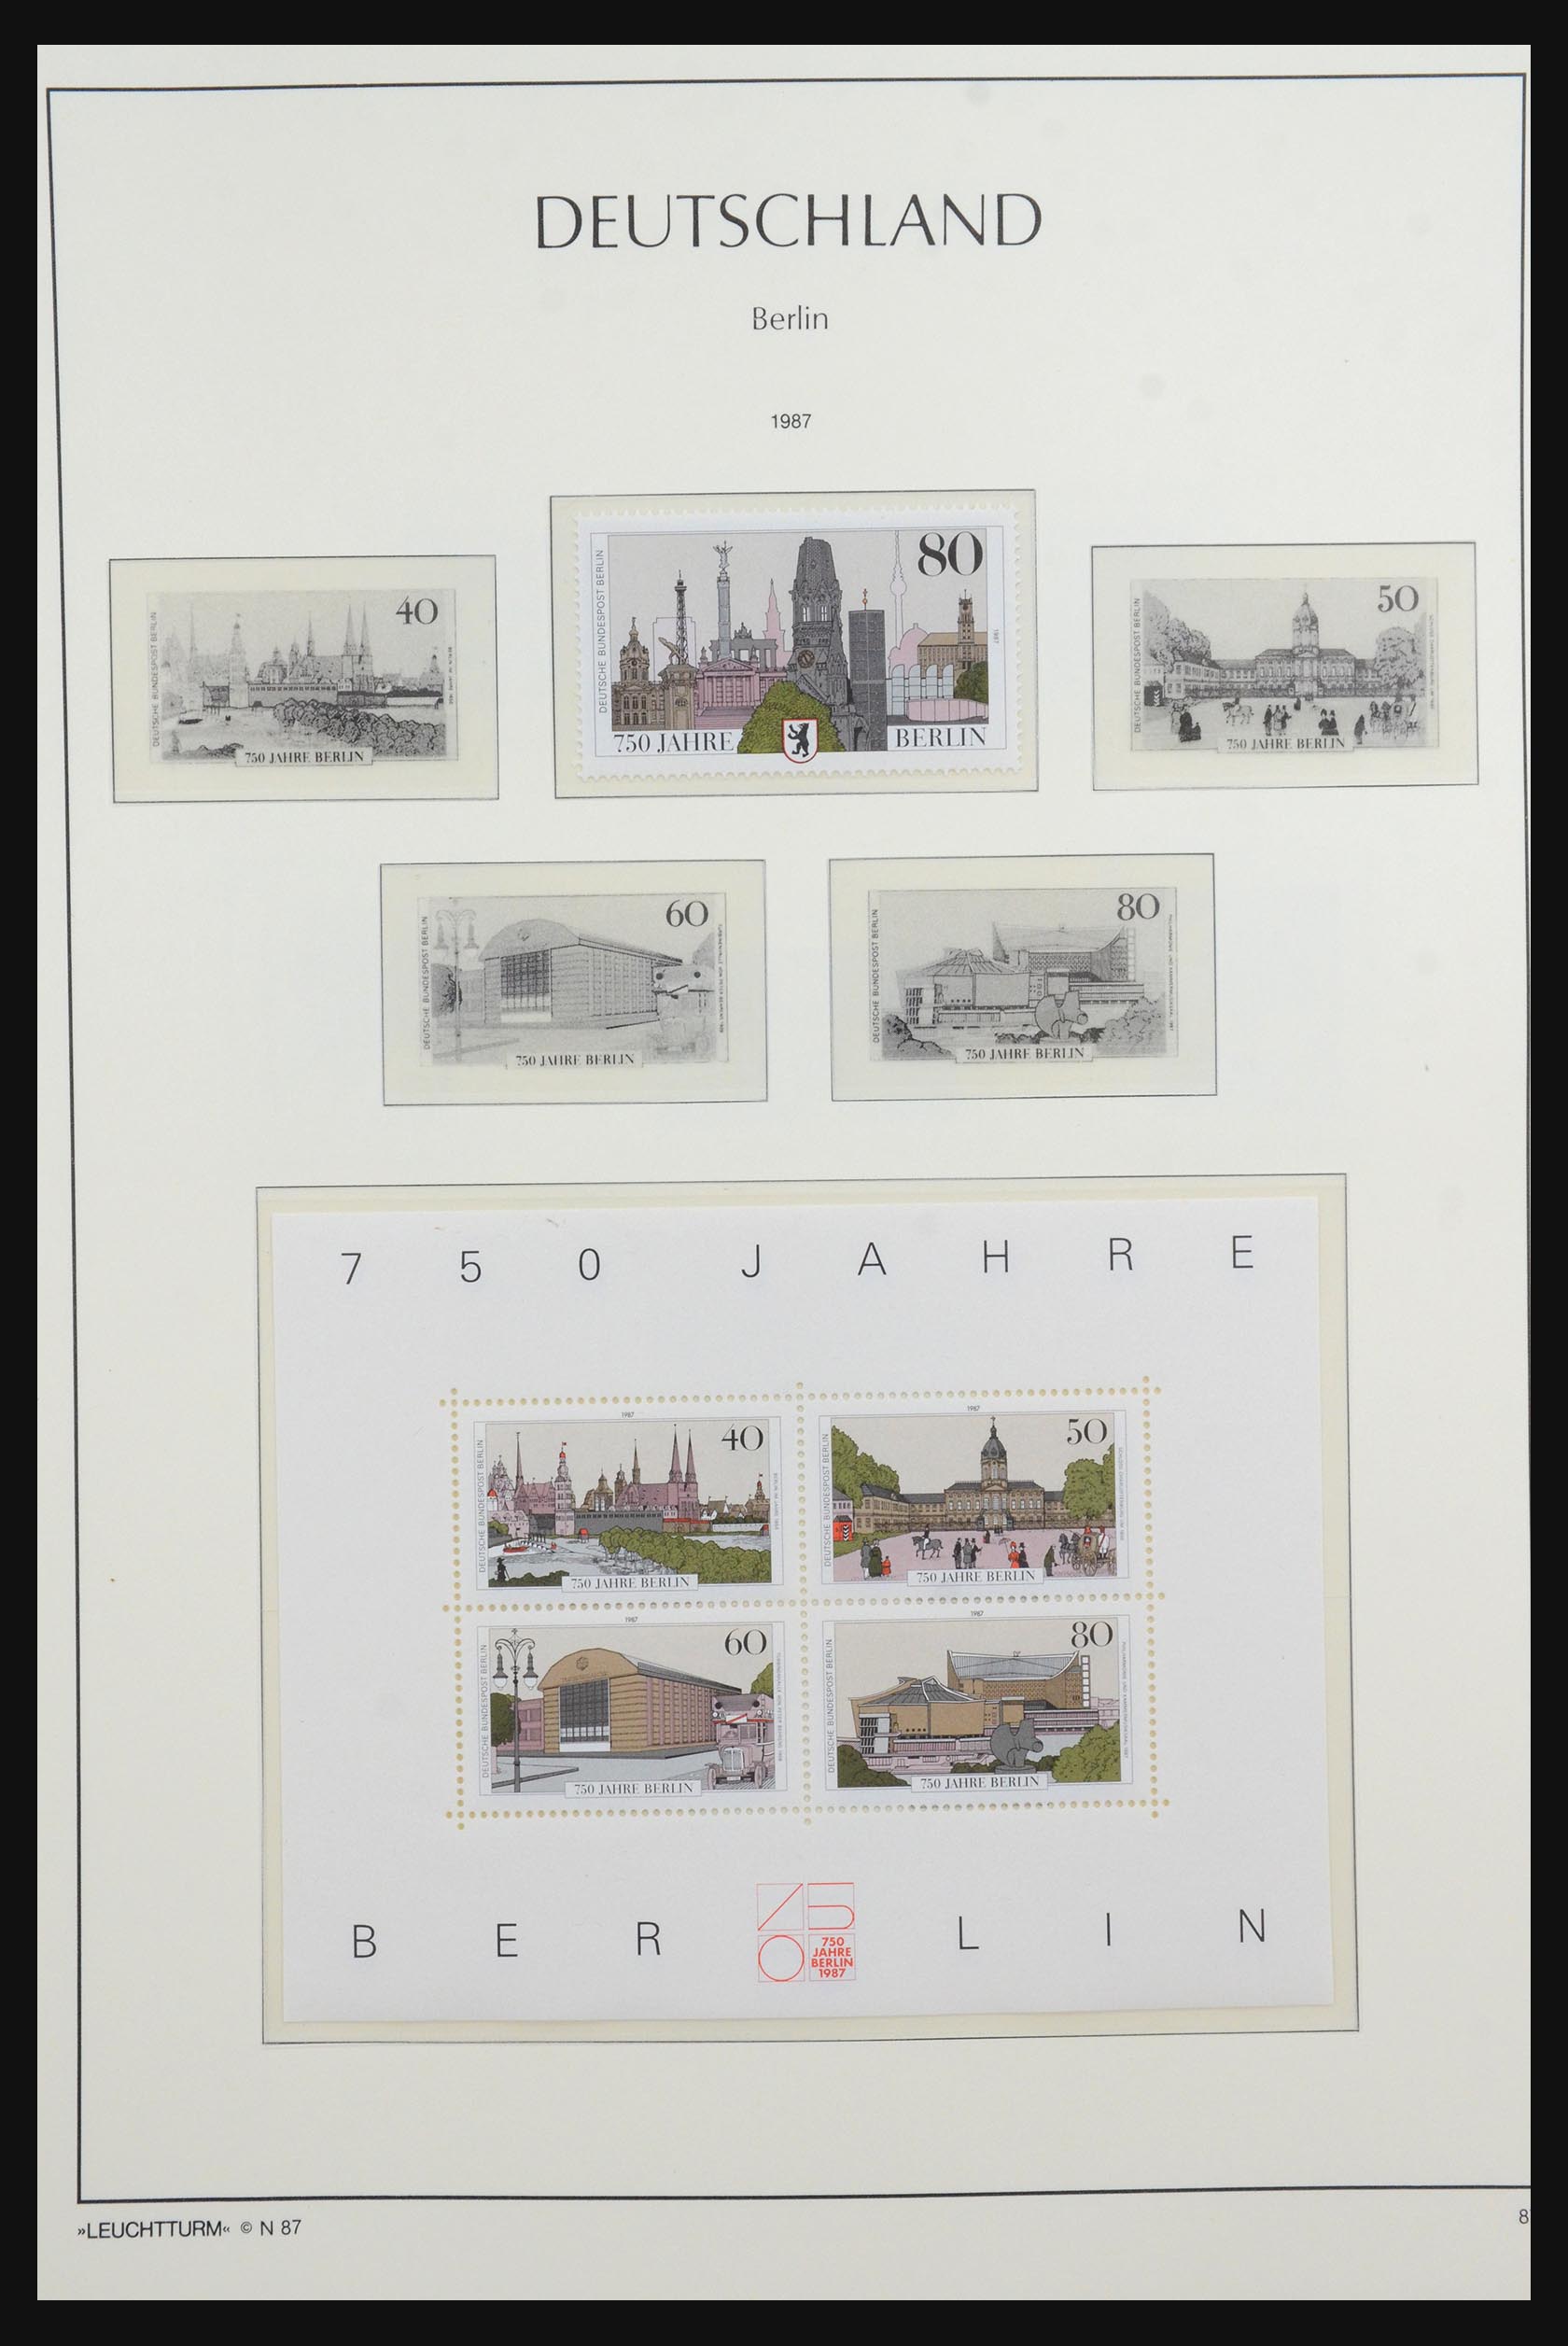 31601 076 - 31601 Bundespost, Berlin and Saar 1948-2008.